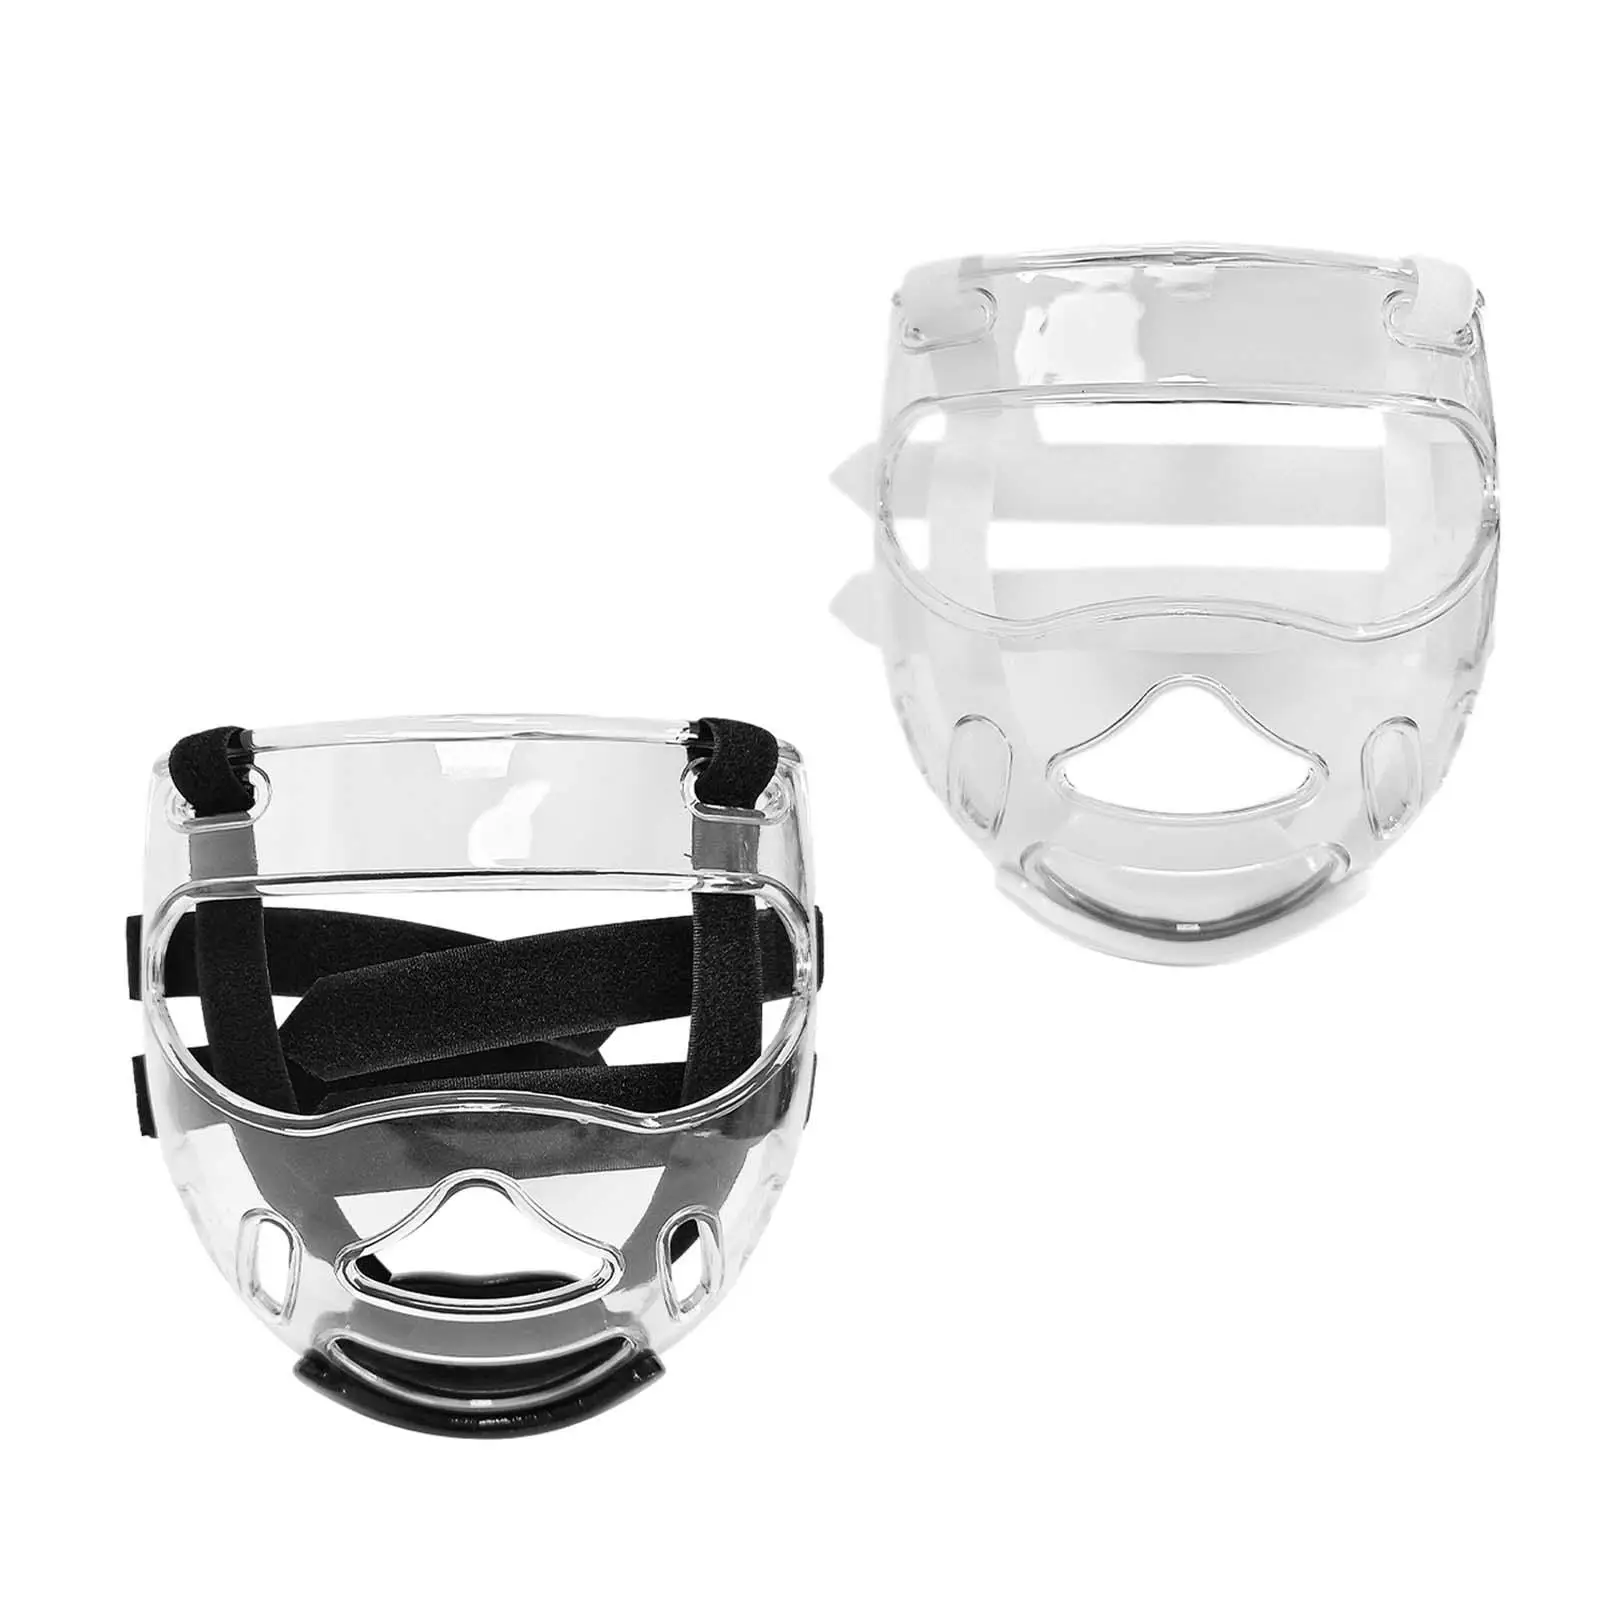 Taekwondo Face Mask Taekwondo Face Shield Breathable Face Protection Cover for Karate Boxin Sanda Muay Thai Training Equipment